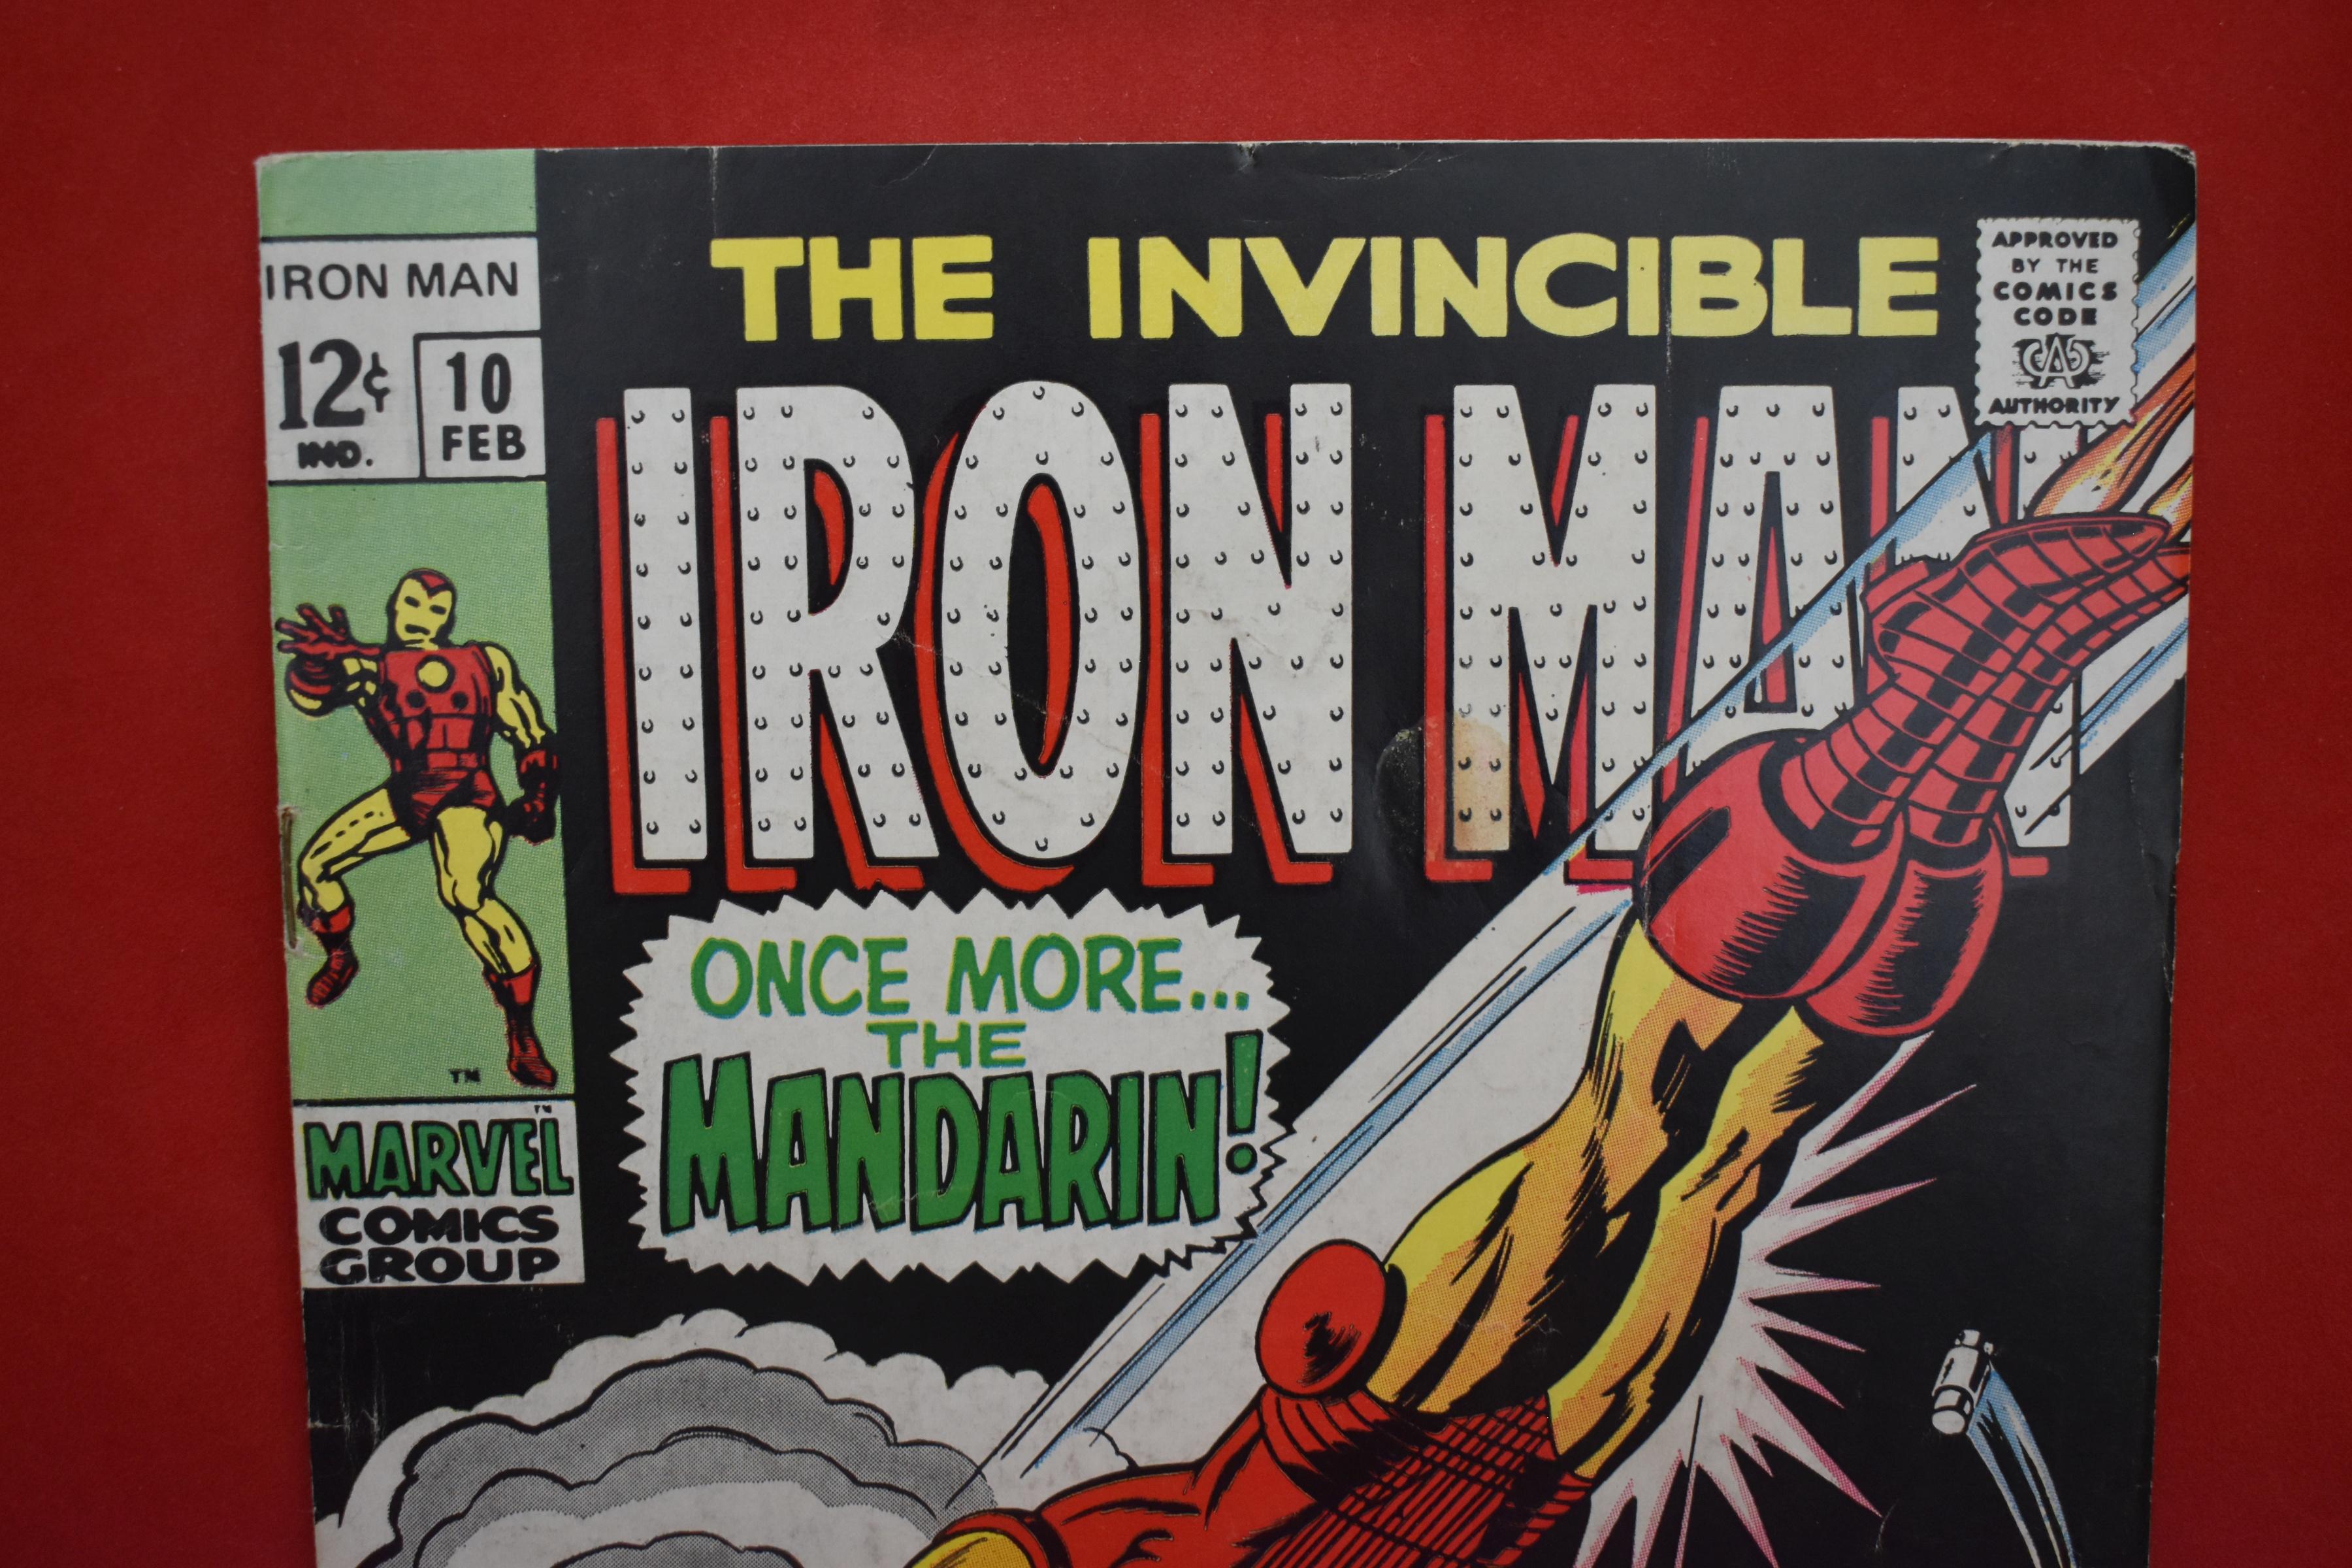 IRON MAN #10 | ONCE MORE.. THE MANDARIN!  | CLASSIC GEORGE TUSKA - 1968 | NICE BOOK!